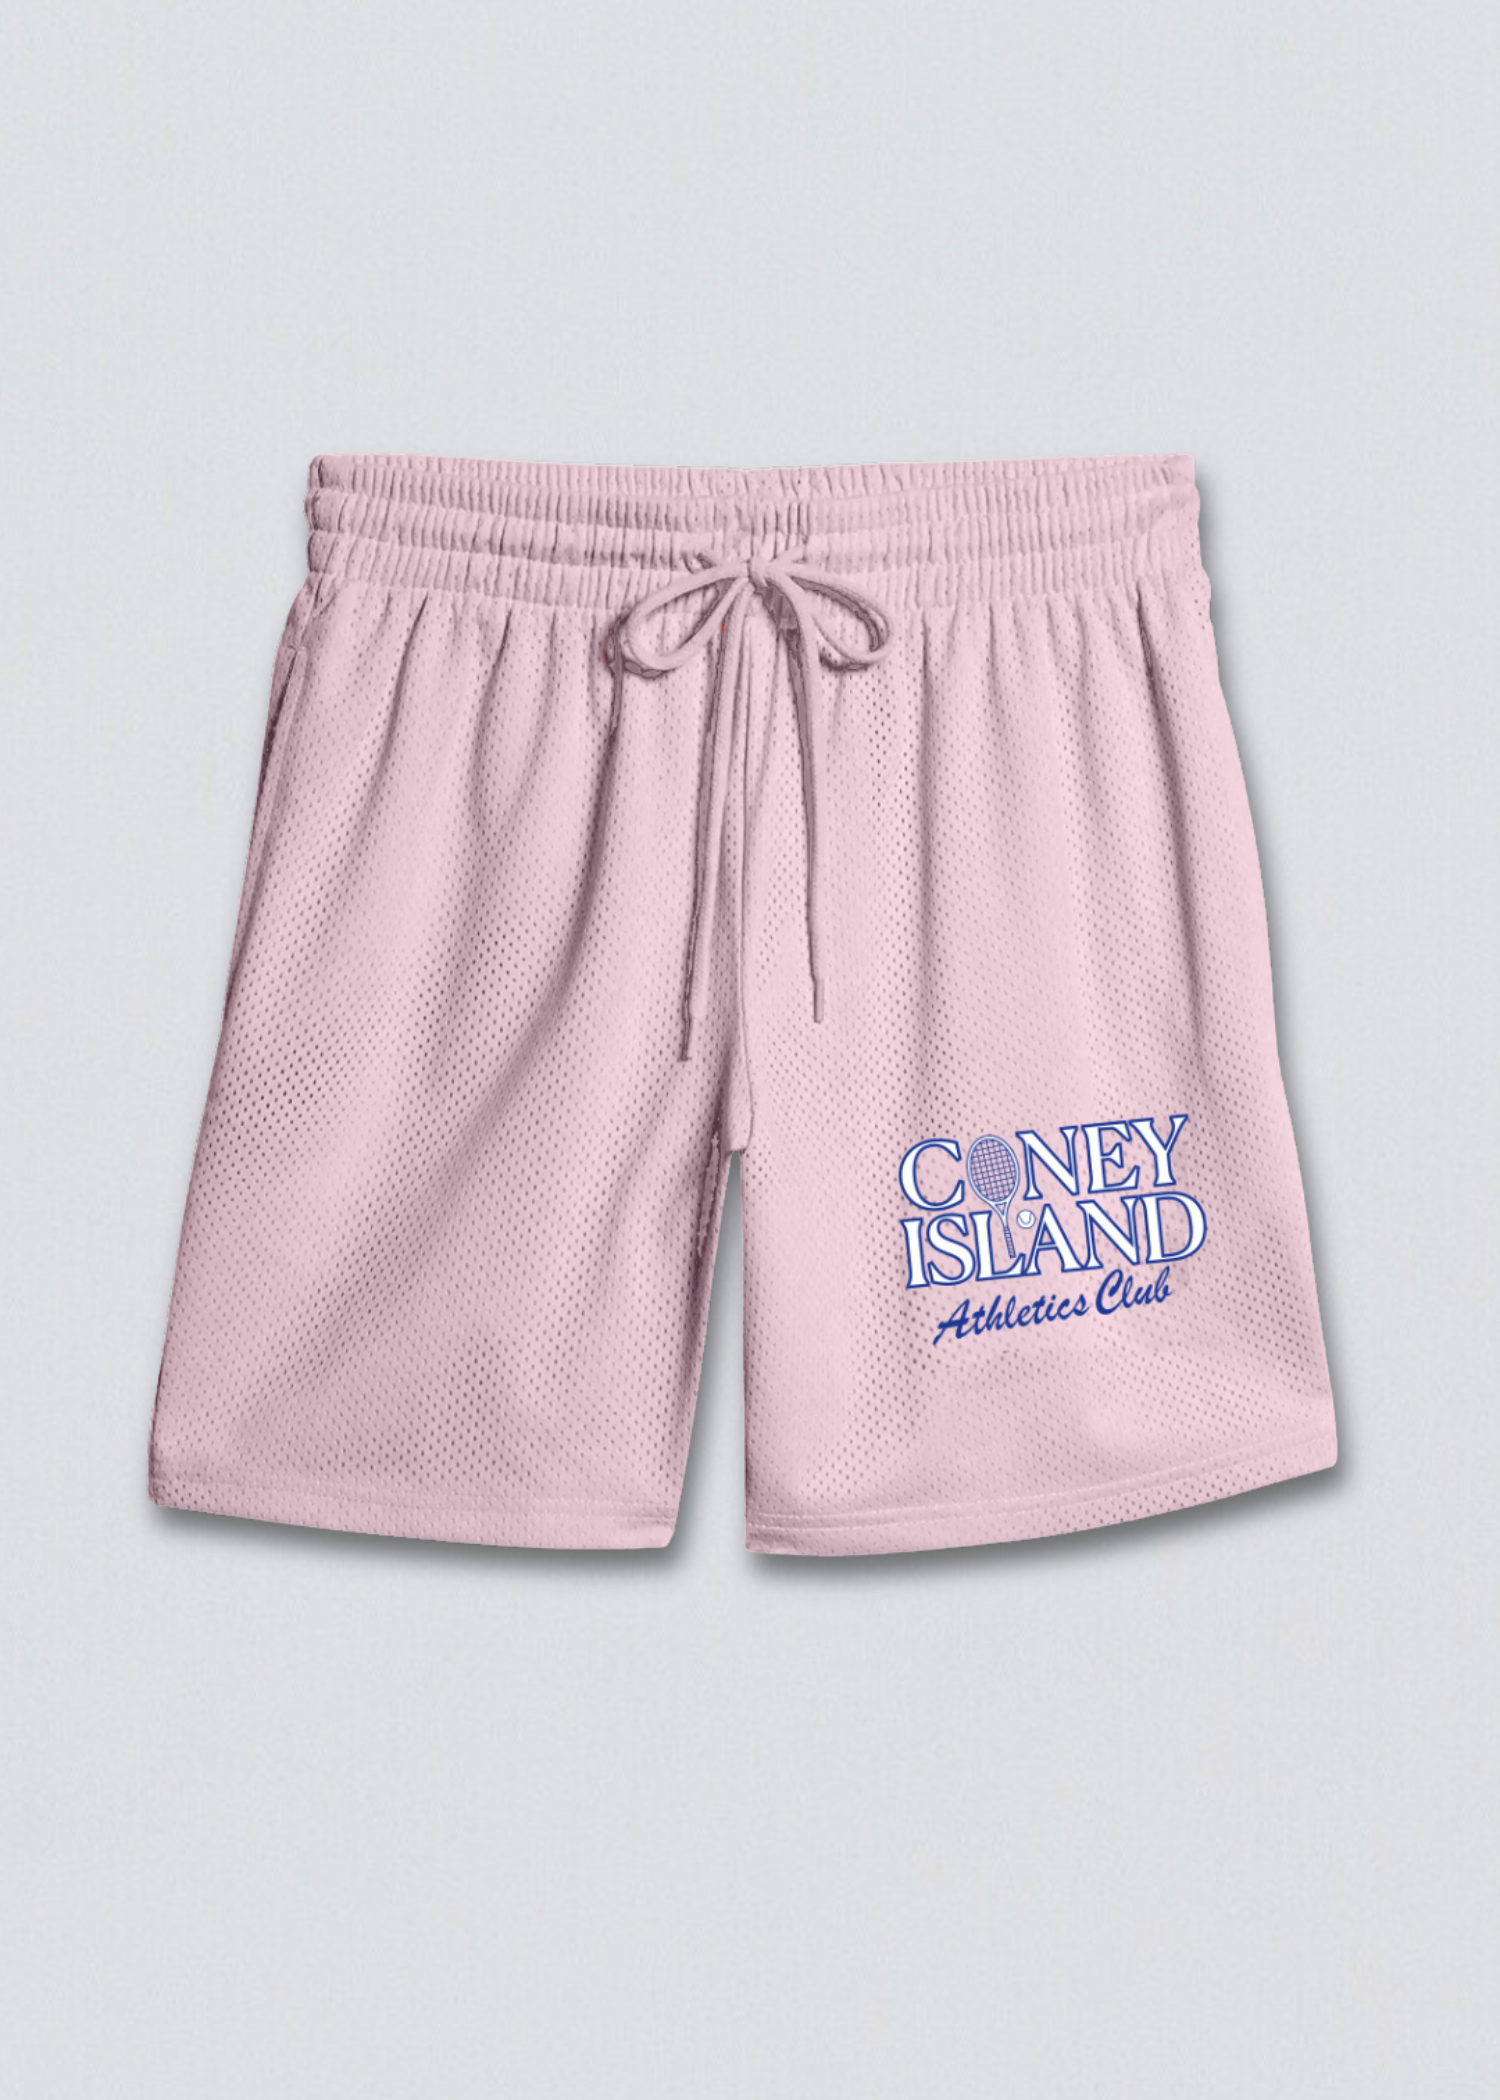 Coney Island Athletics Club Graphic Mesh Shorts